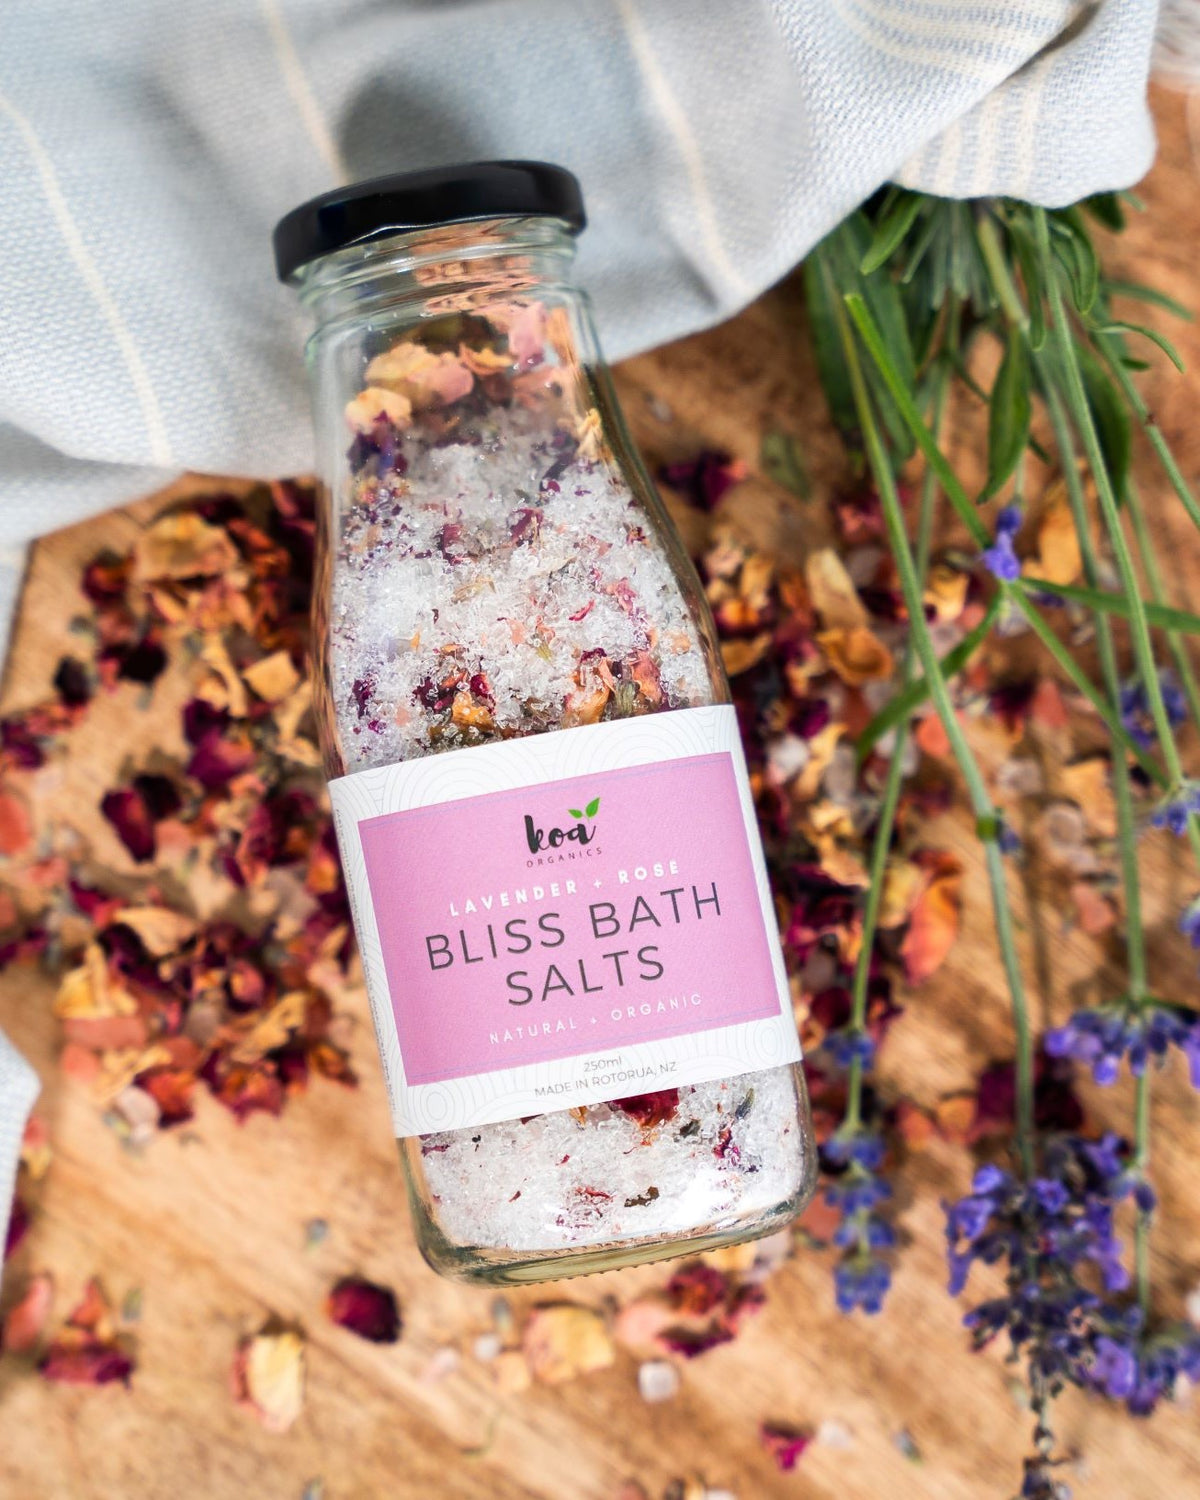 Koa Organics Bliss Bath Salts Lavender and Rose